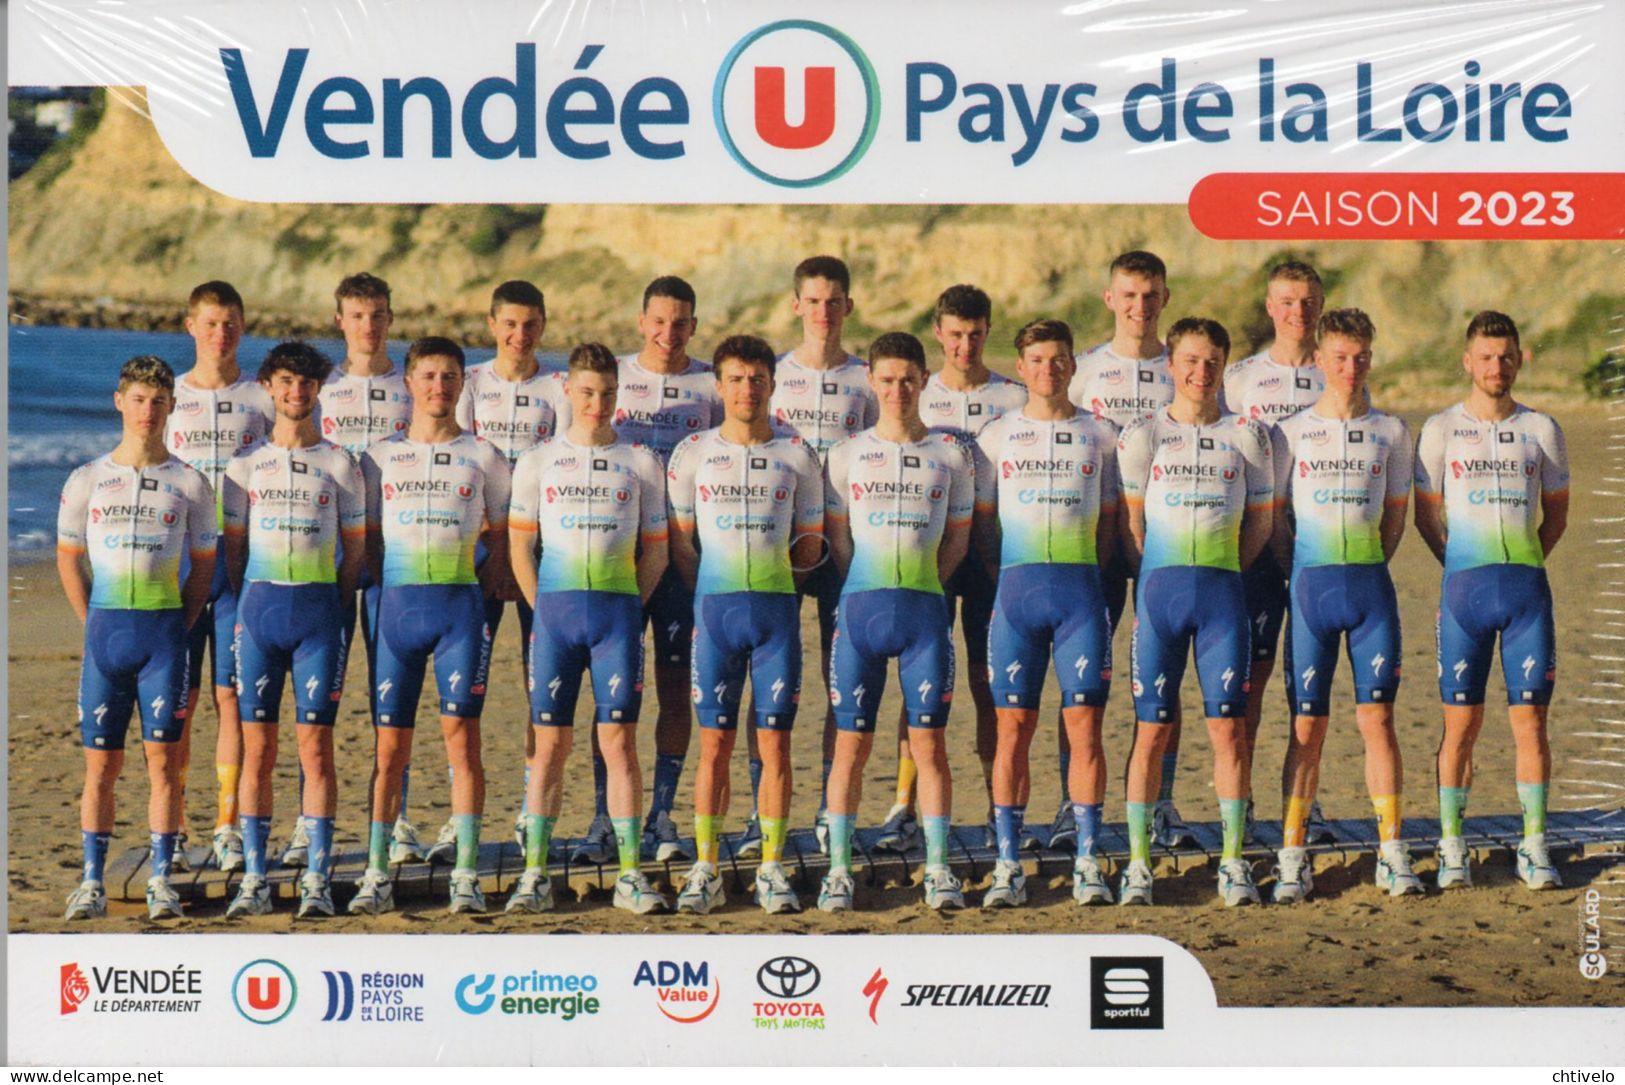 Cyclisme, Serie Vendée U 2023, Sous Blister - Wielrennen